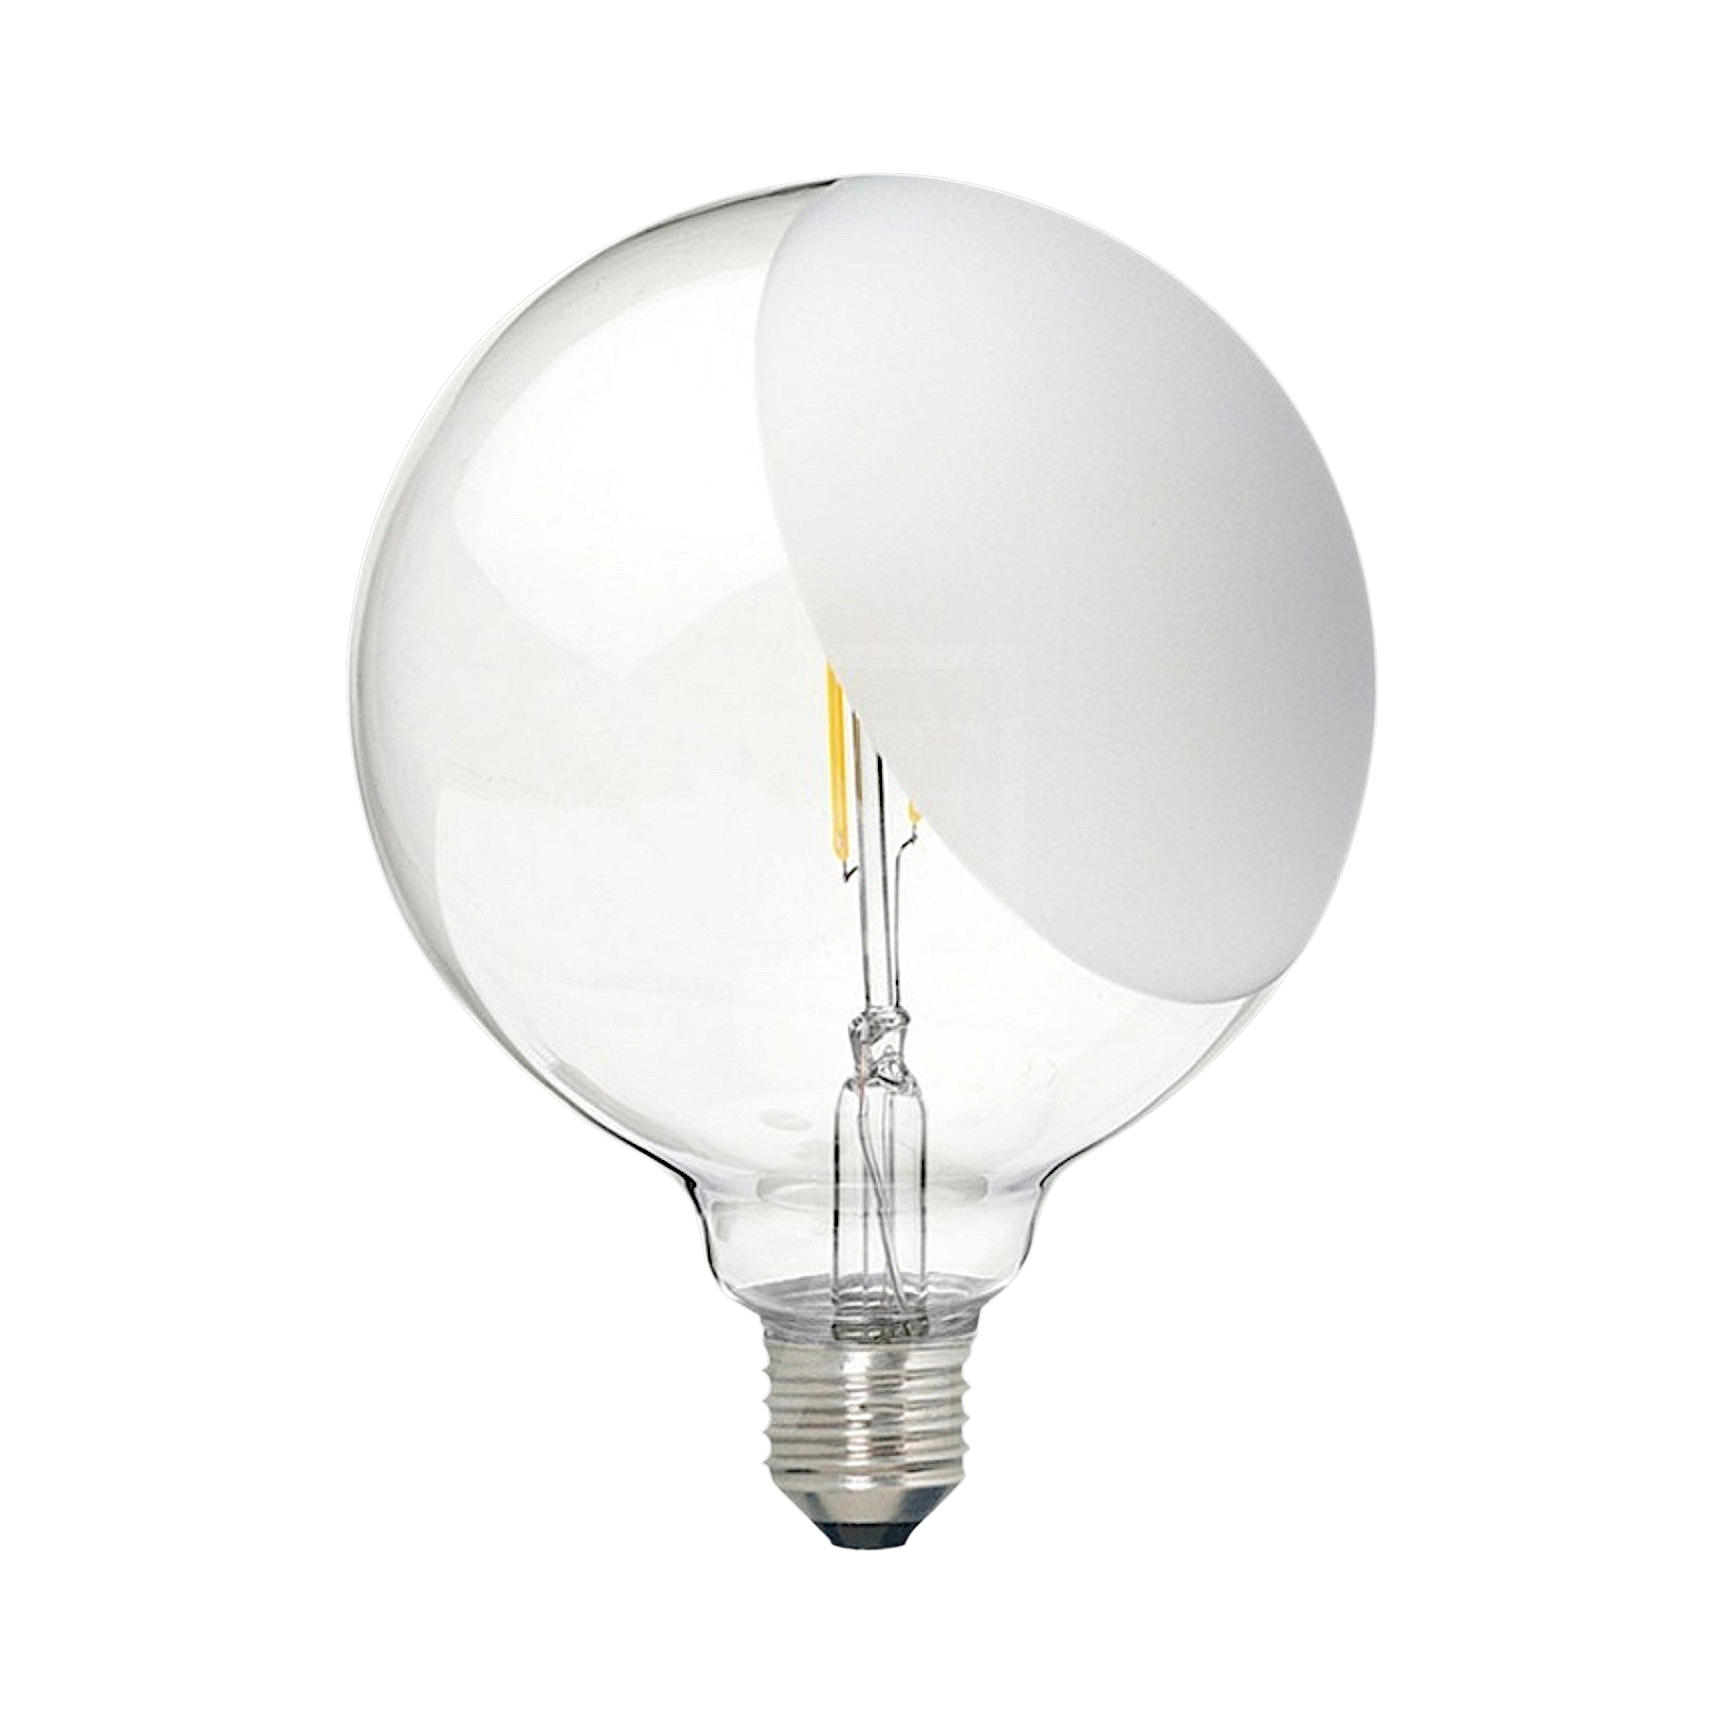 88304 Flos LAMPADINA LED light bulb E27 2W